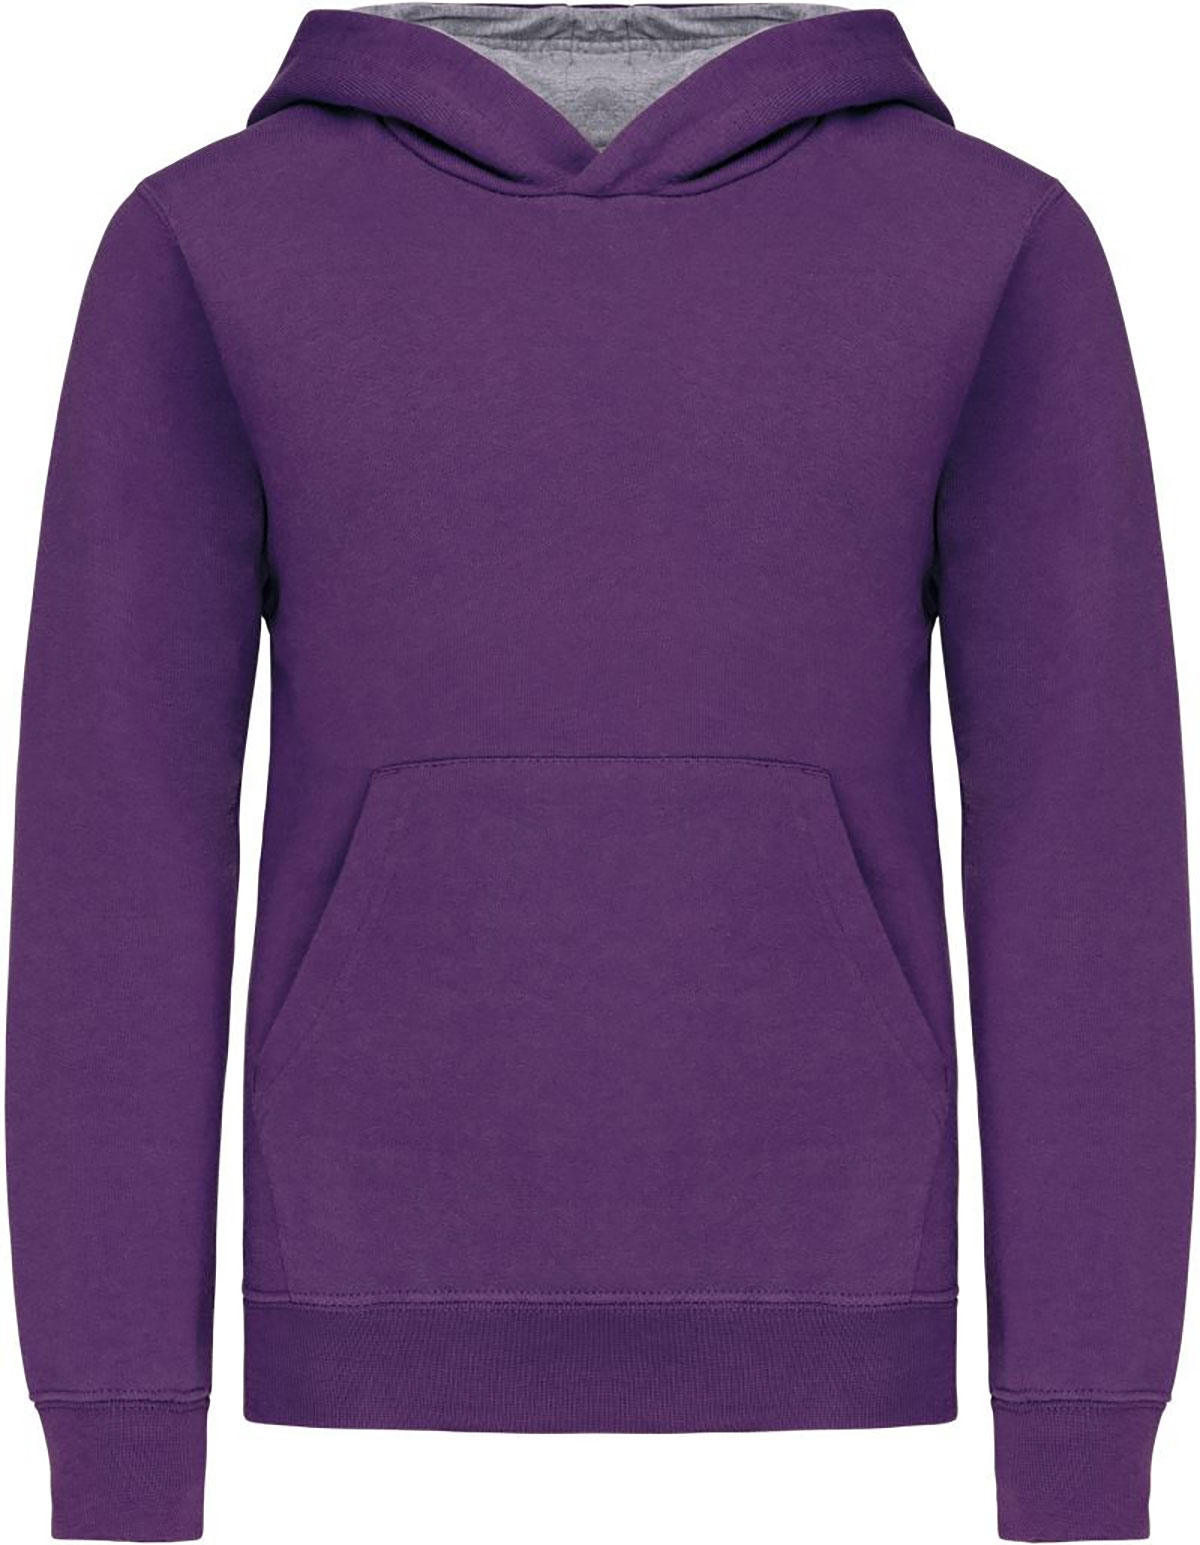 purple/ oxfordgrey